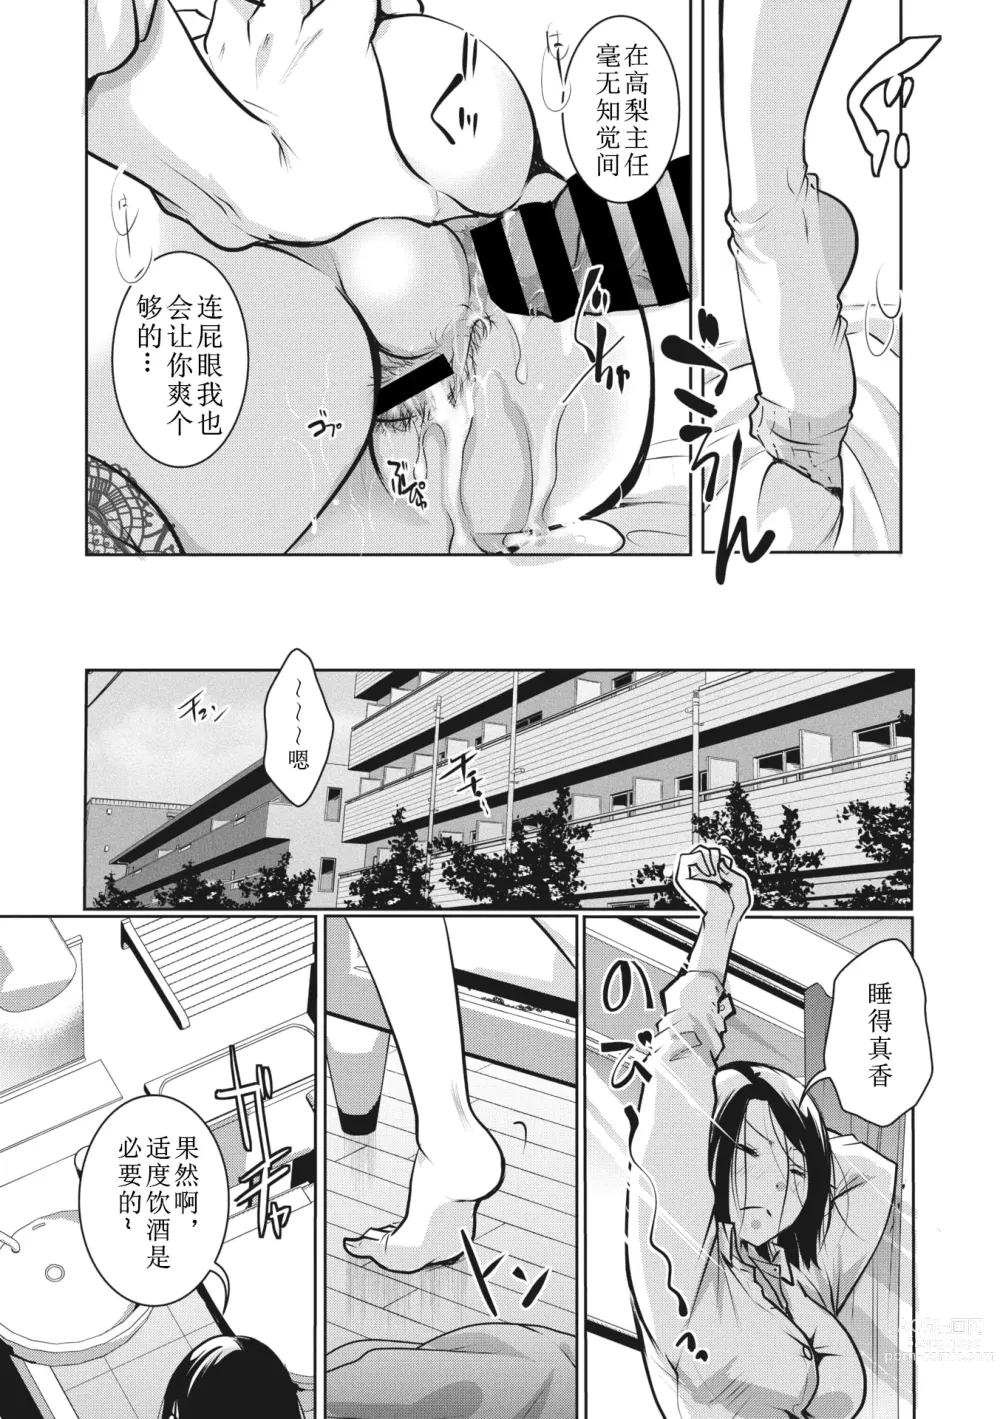 Page 21 of manga 主任今晚也没觉察